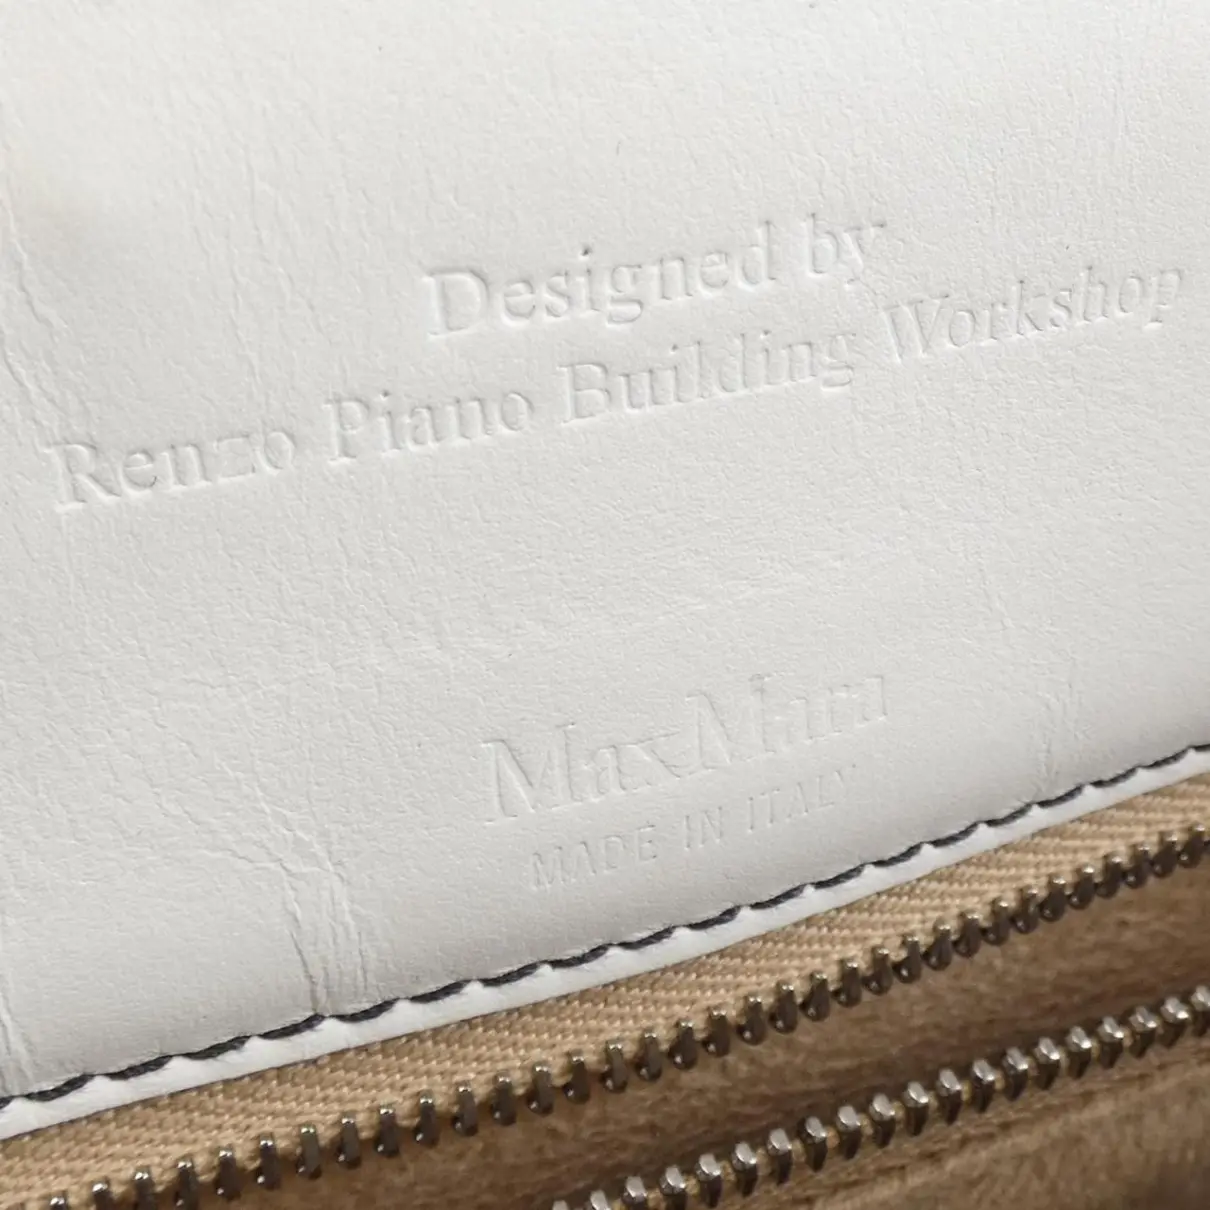 Whitney leather handbag Max Mara